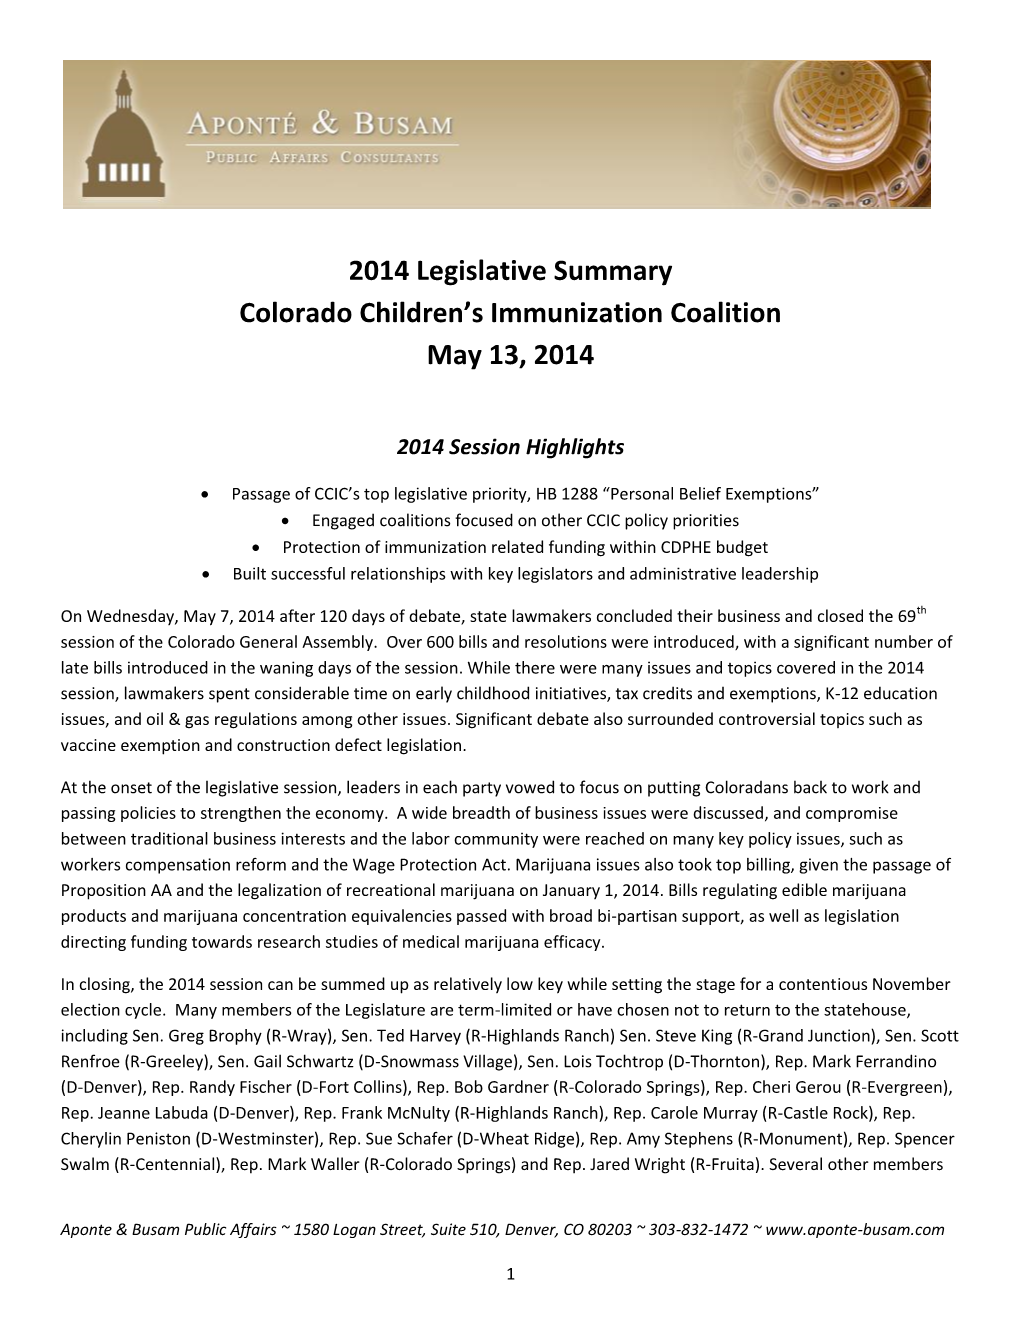 2014 Legislative Summary Colorado Children's Immunization Coalition